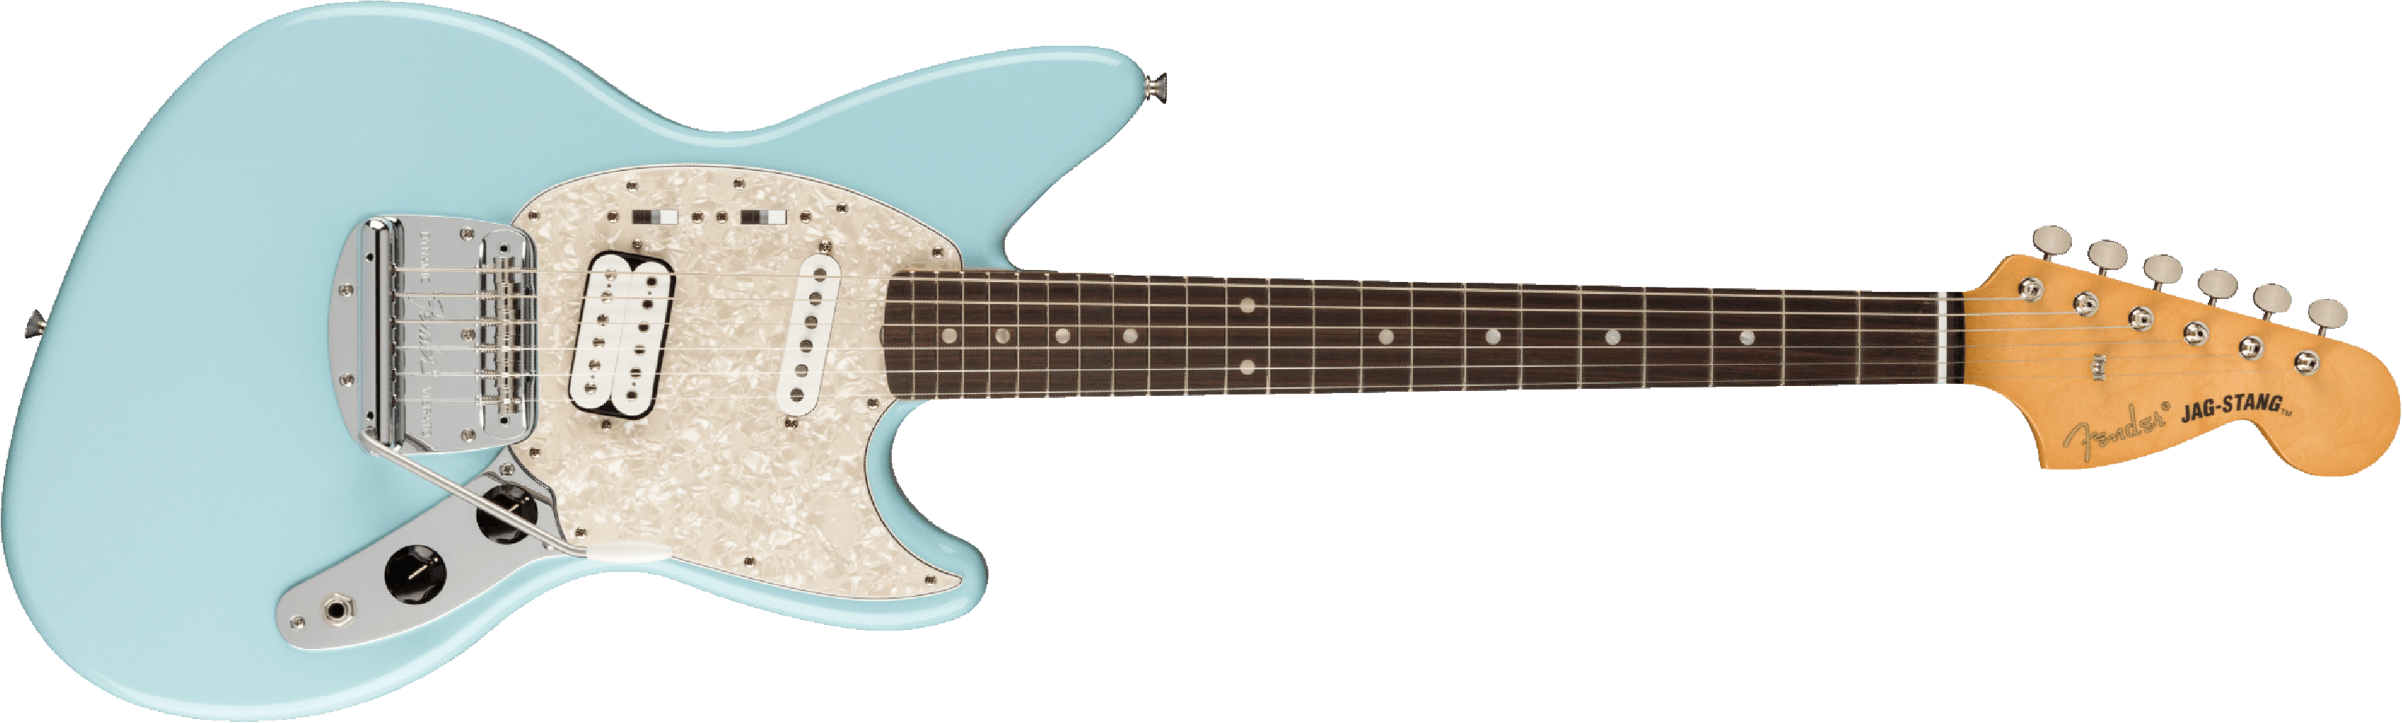 Fender Jag-stang Kurt Cobain Artist Hs Trem Rw - Sonic Blue - Retro rock electric guitar - Main picture